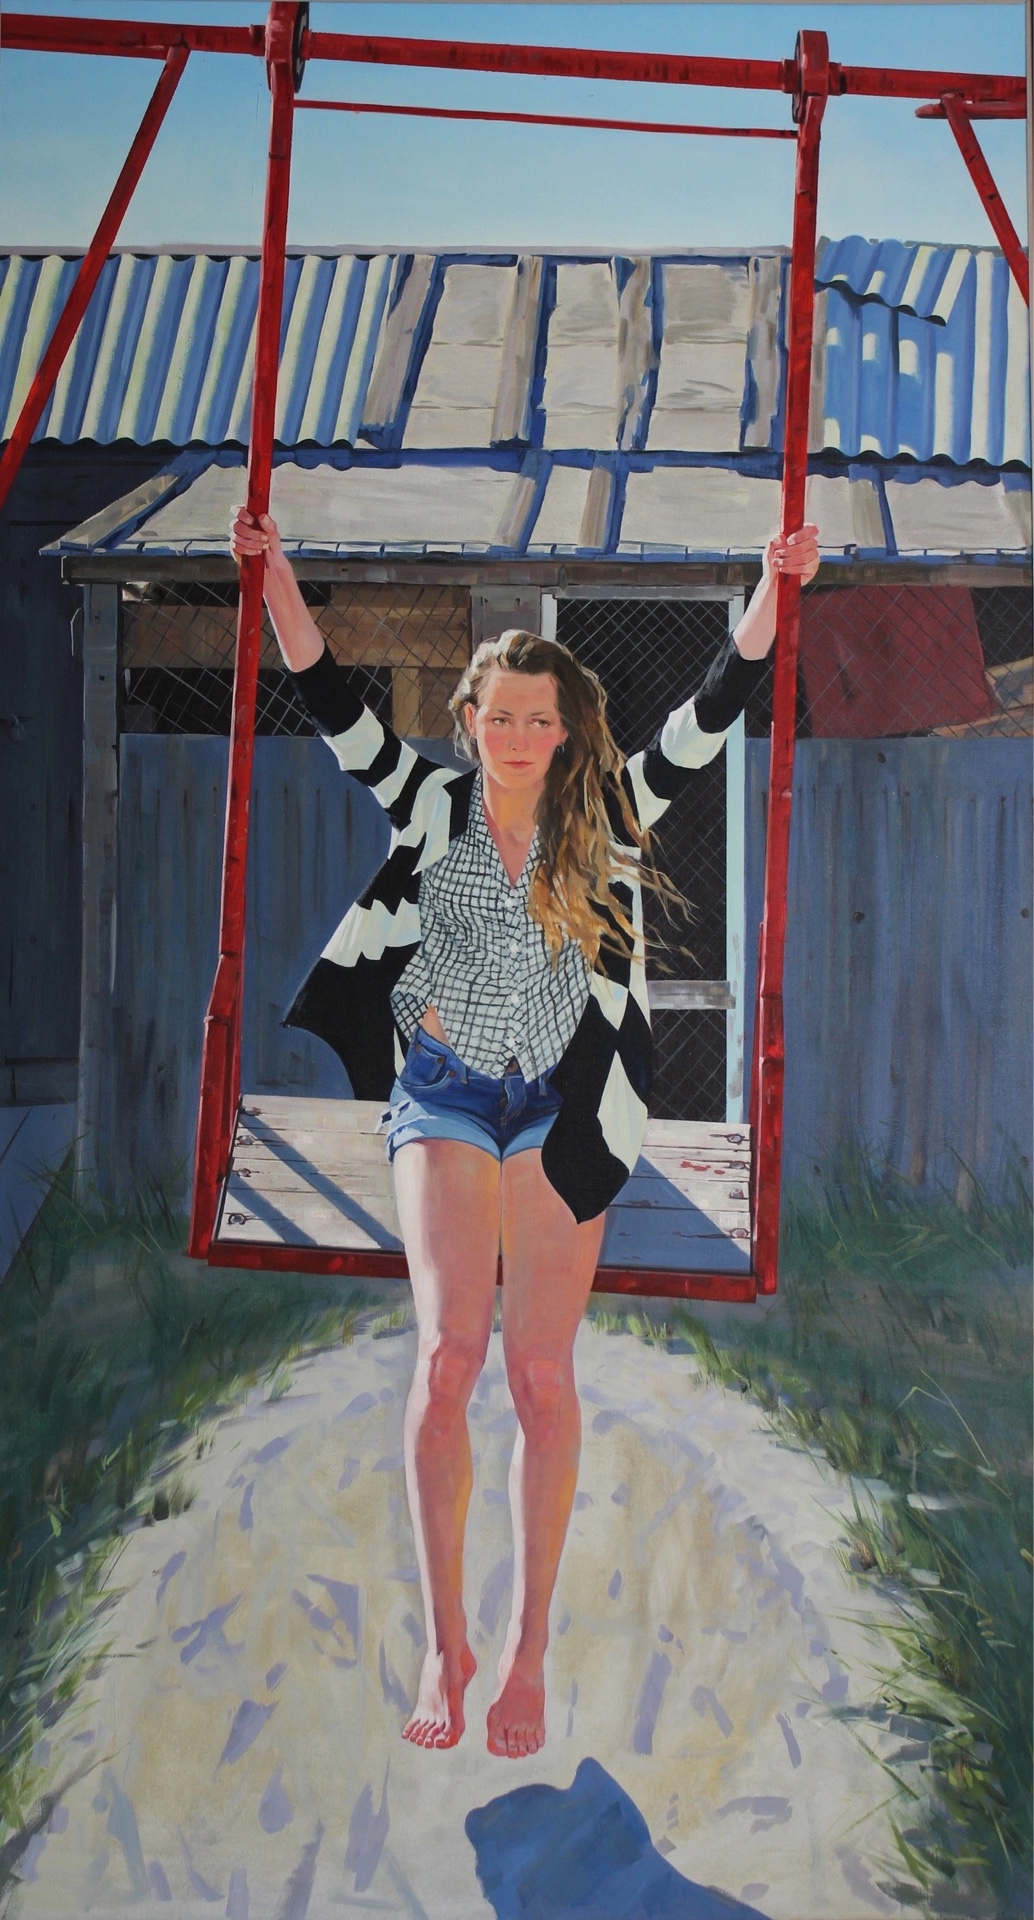 The Swing - 1, Sergey Nekrasov, Buy the painting Oil